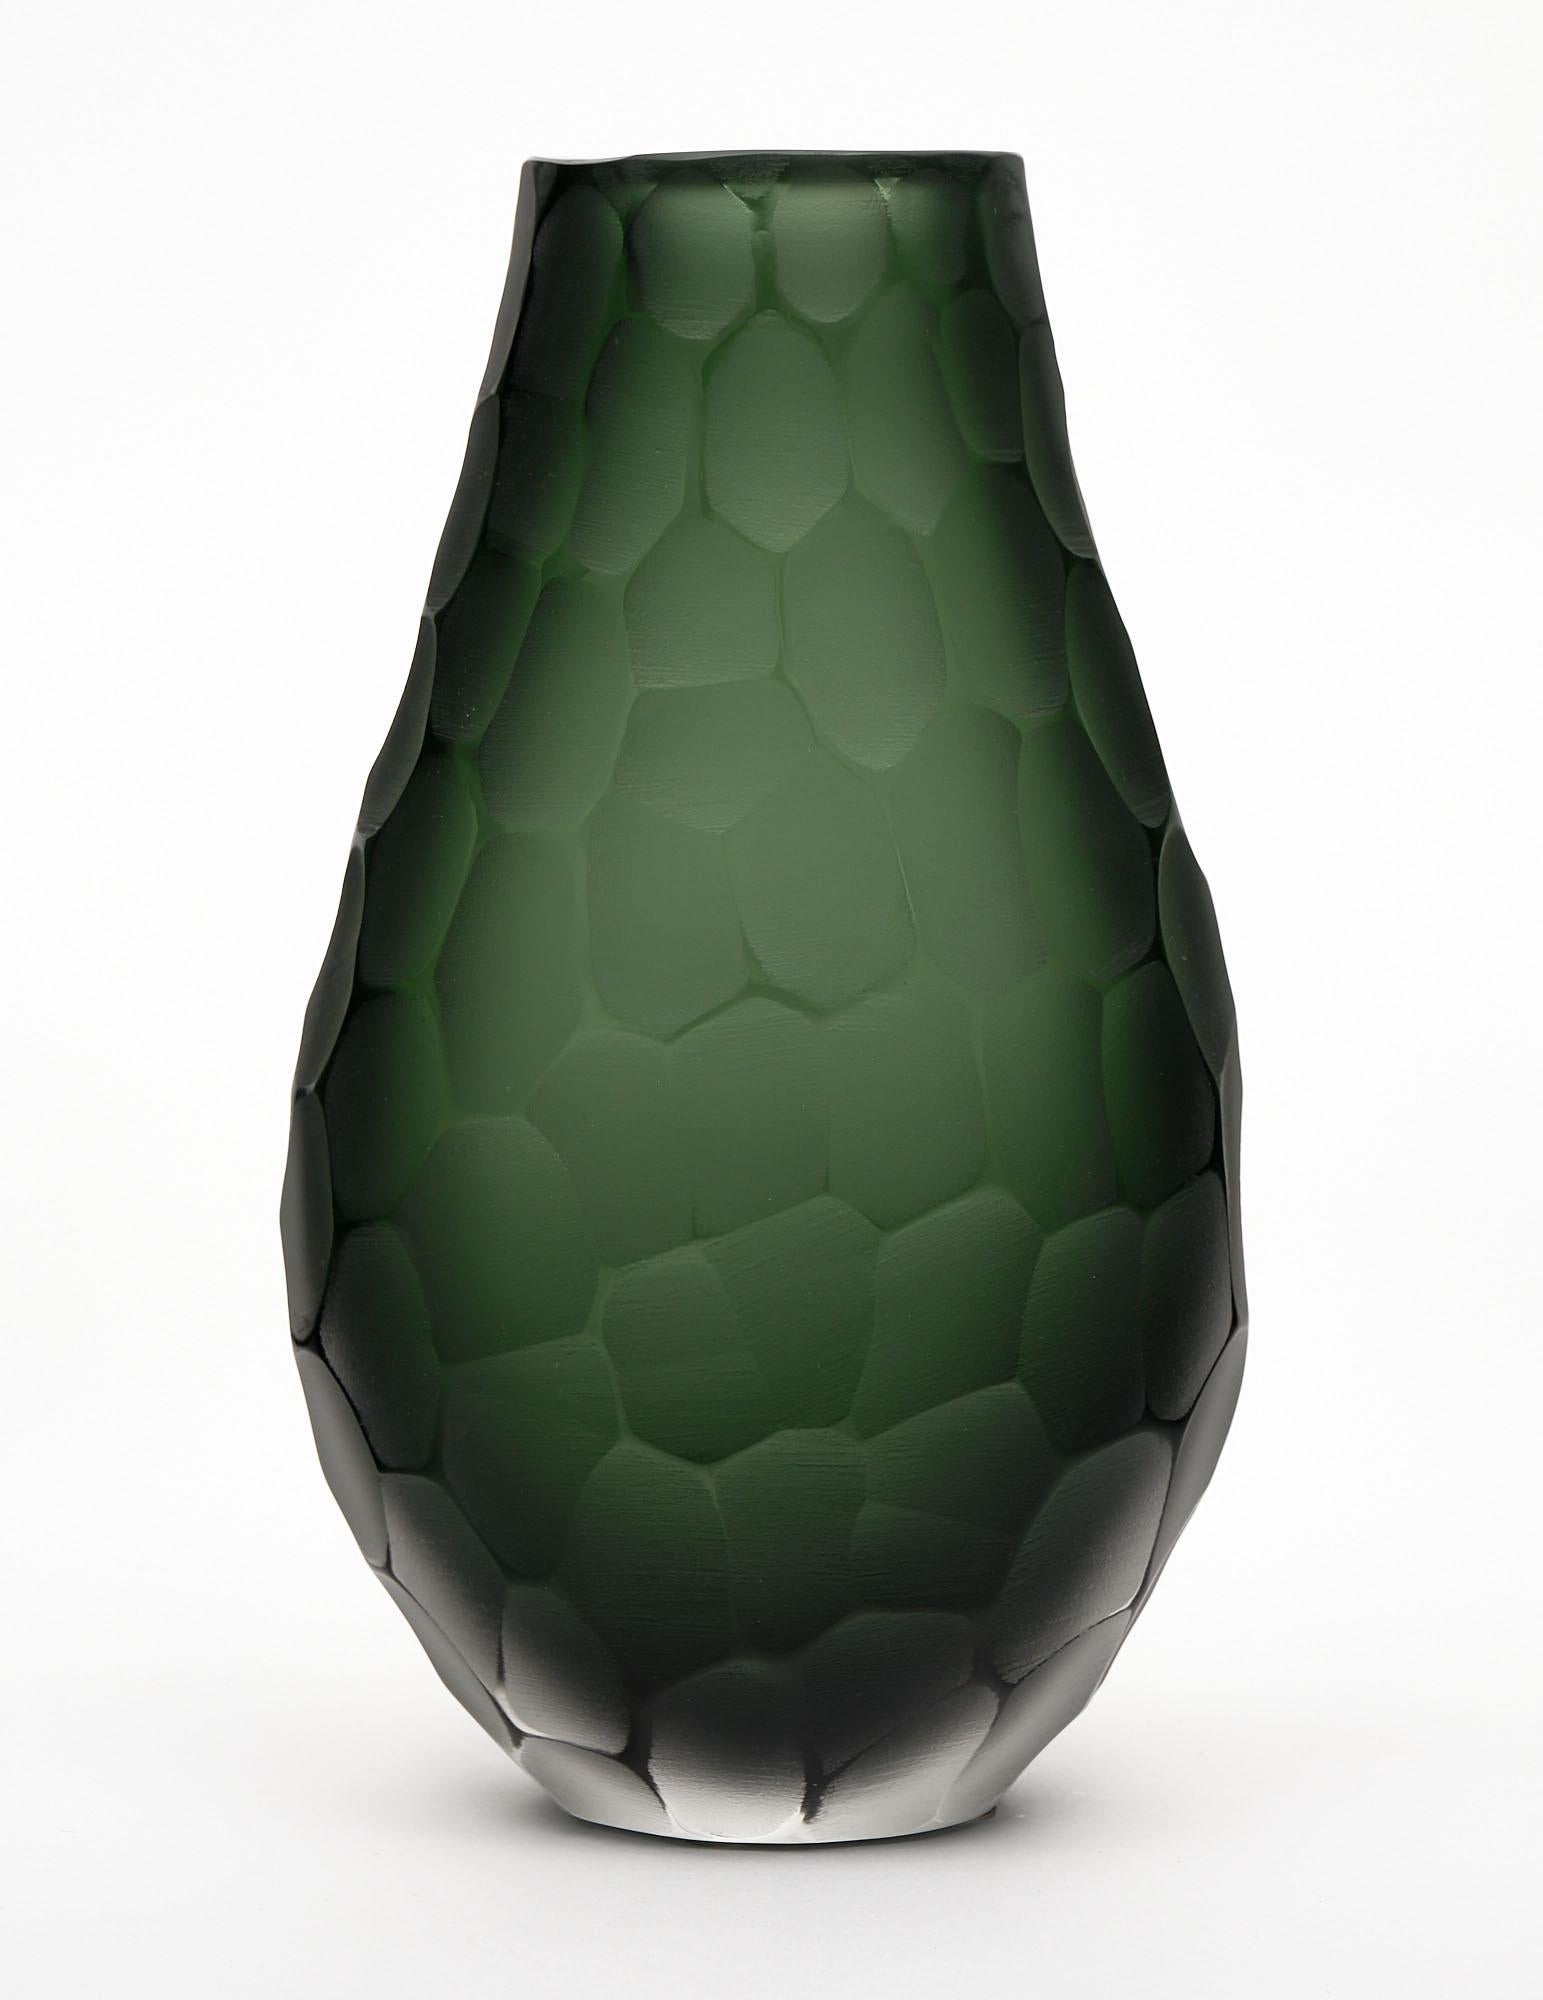 Modern “Vetro Battuto” Green Murano Glass Vases